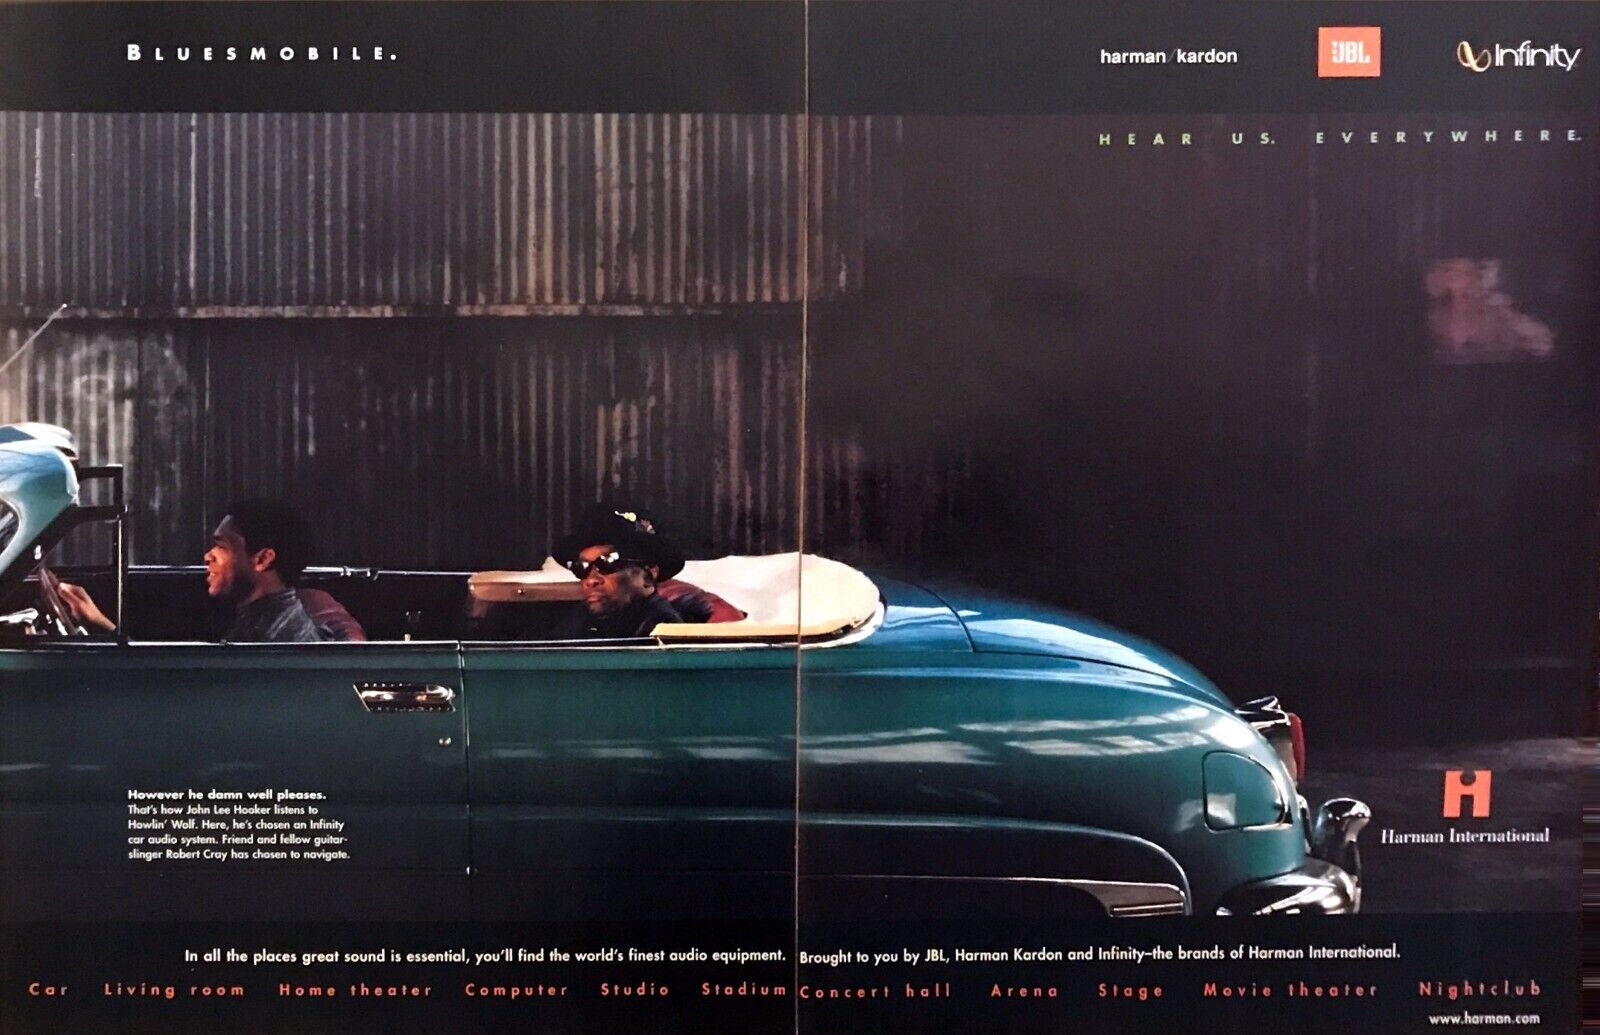 1997 Blues Singer John Lee Hooker in Bluesmobile photo Harman 2-page print ad